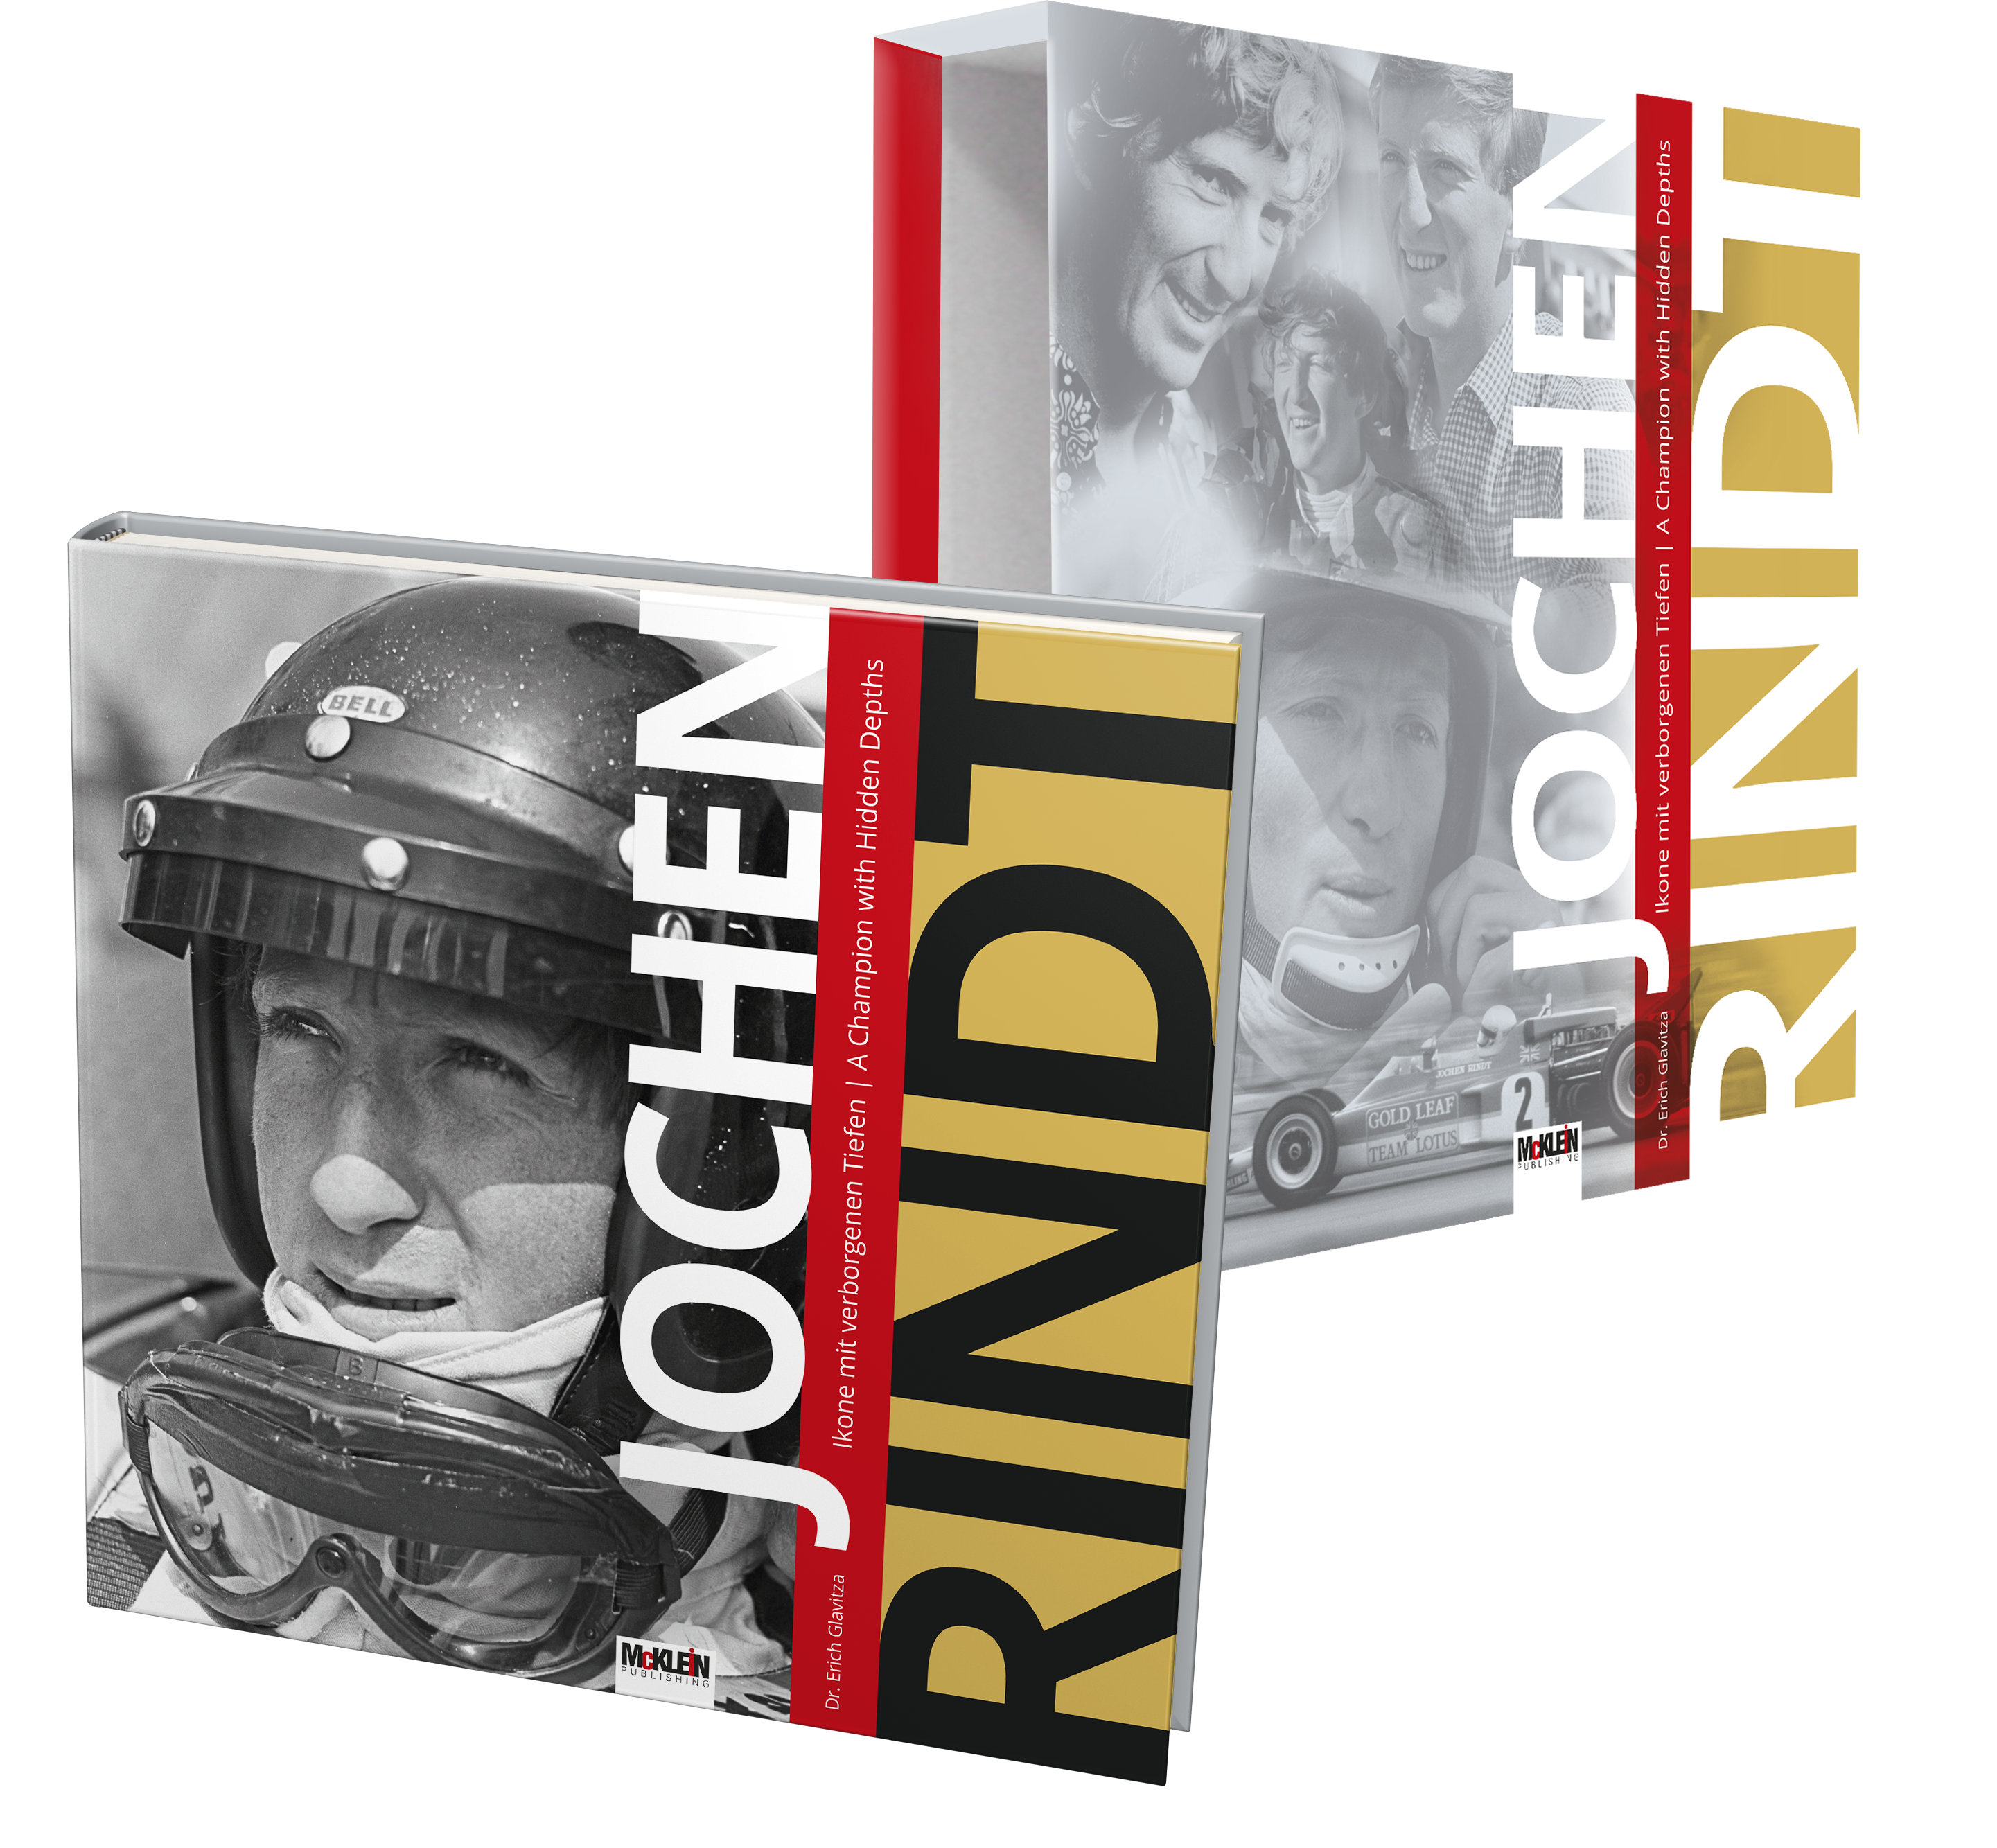 JOCHEN RINDT - A CHAMPION WITH HIDDEN DEPTHS